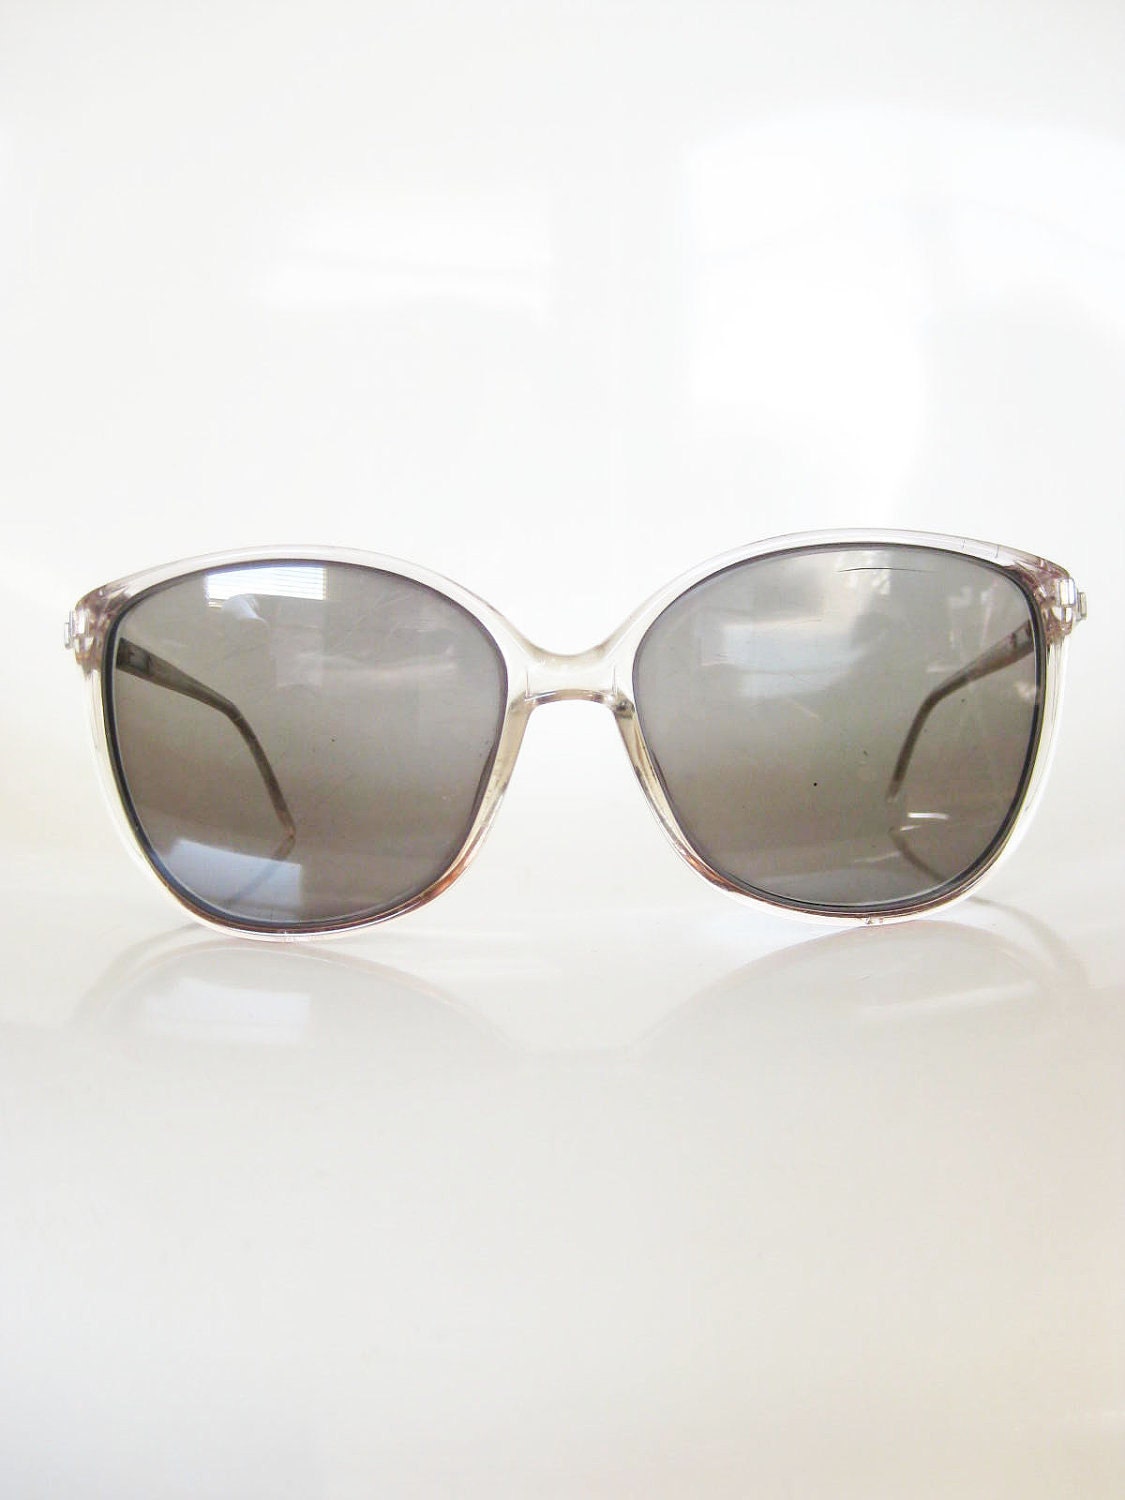 Vintage Unisex Wayfarer 1970s Sunglasses Charcoal Grey Ladies